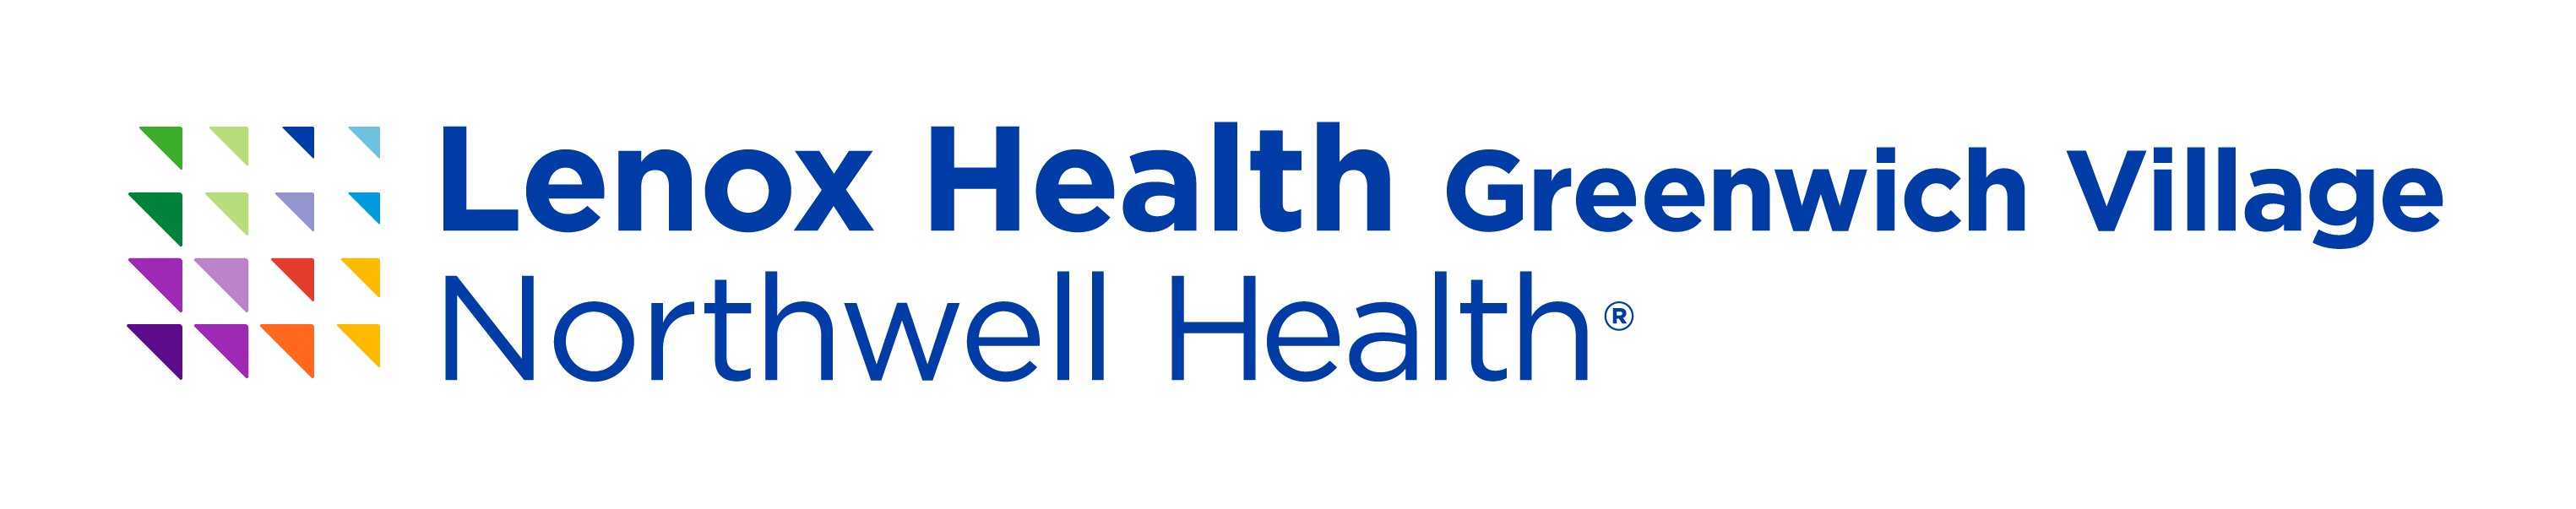 lenox health logo